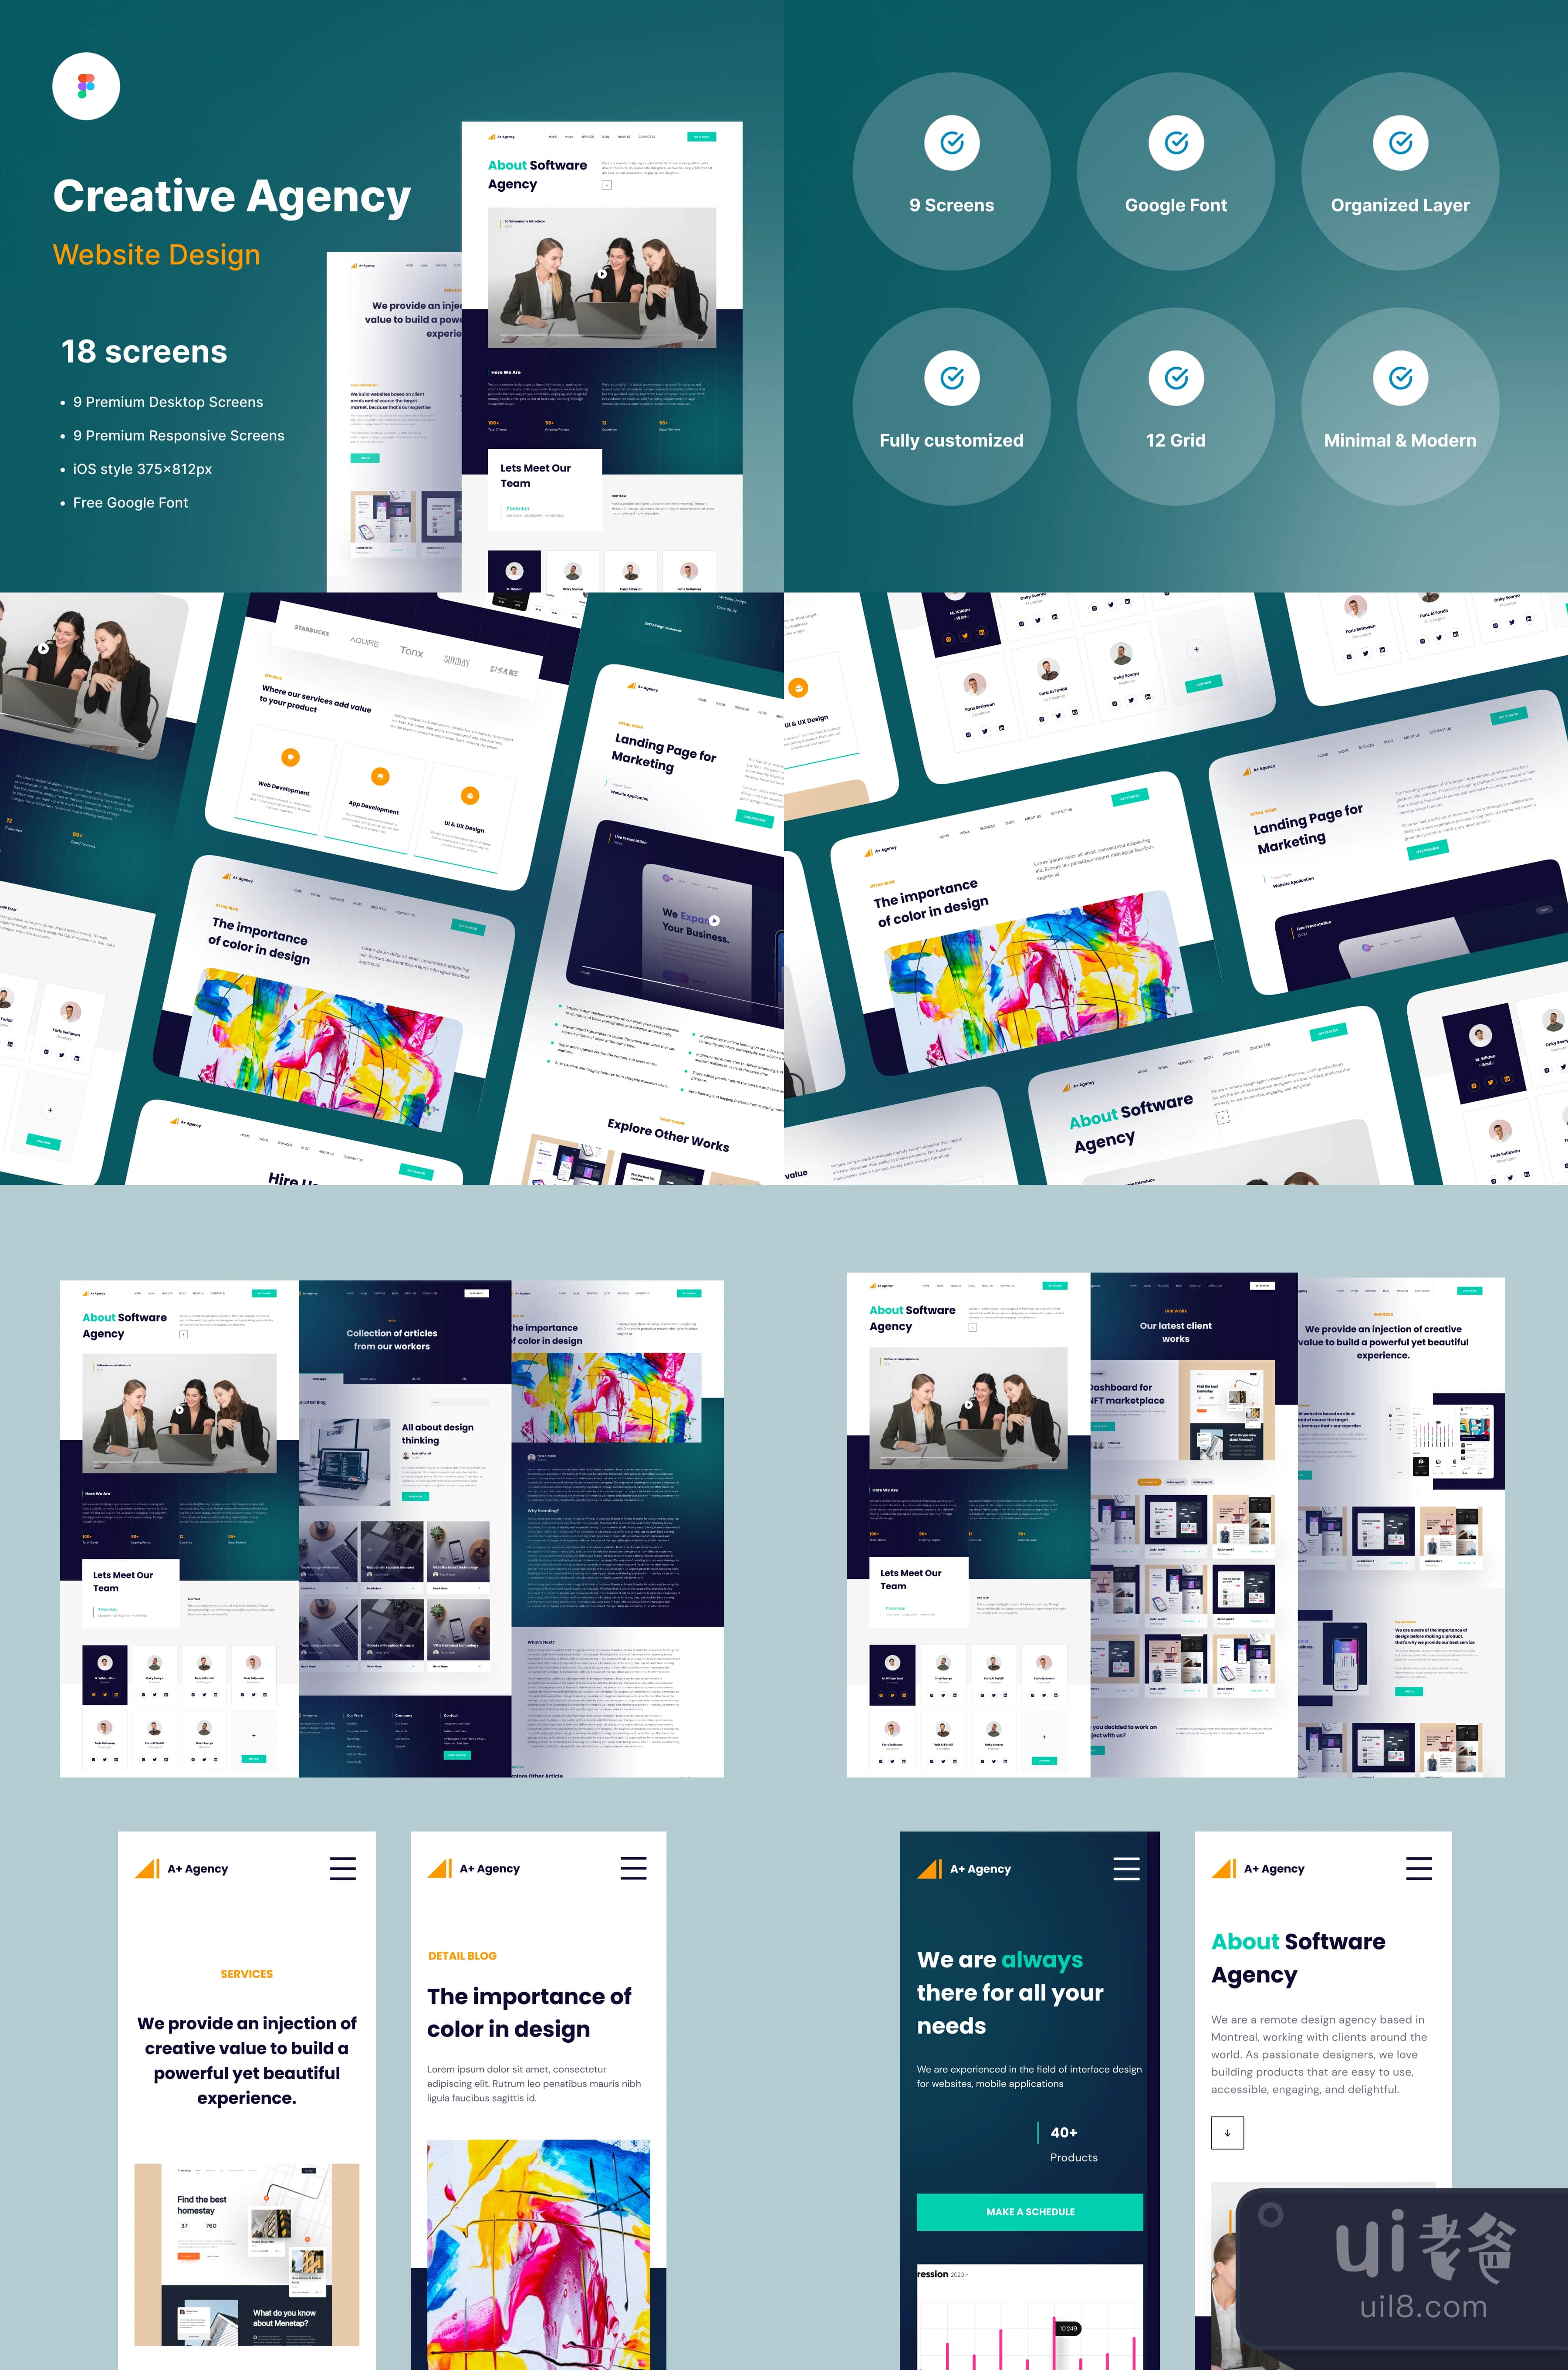 创意机构 - 网站设计UI-Kit (Creative Agency - Website Desig插图1